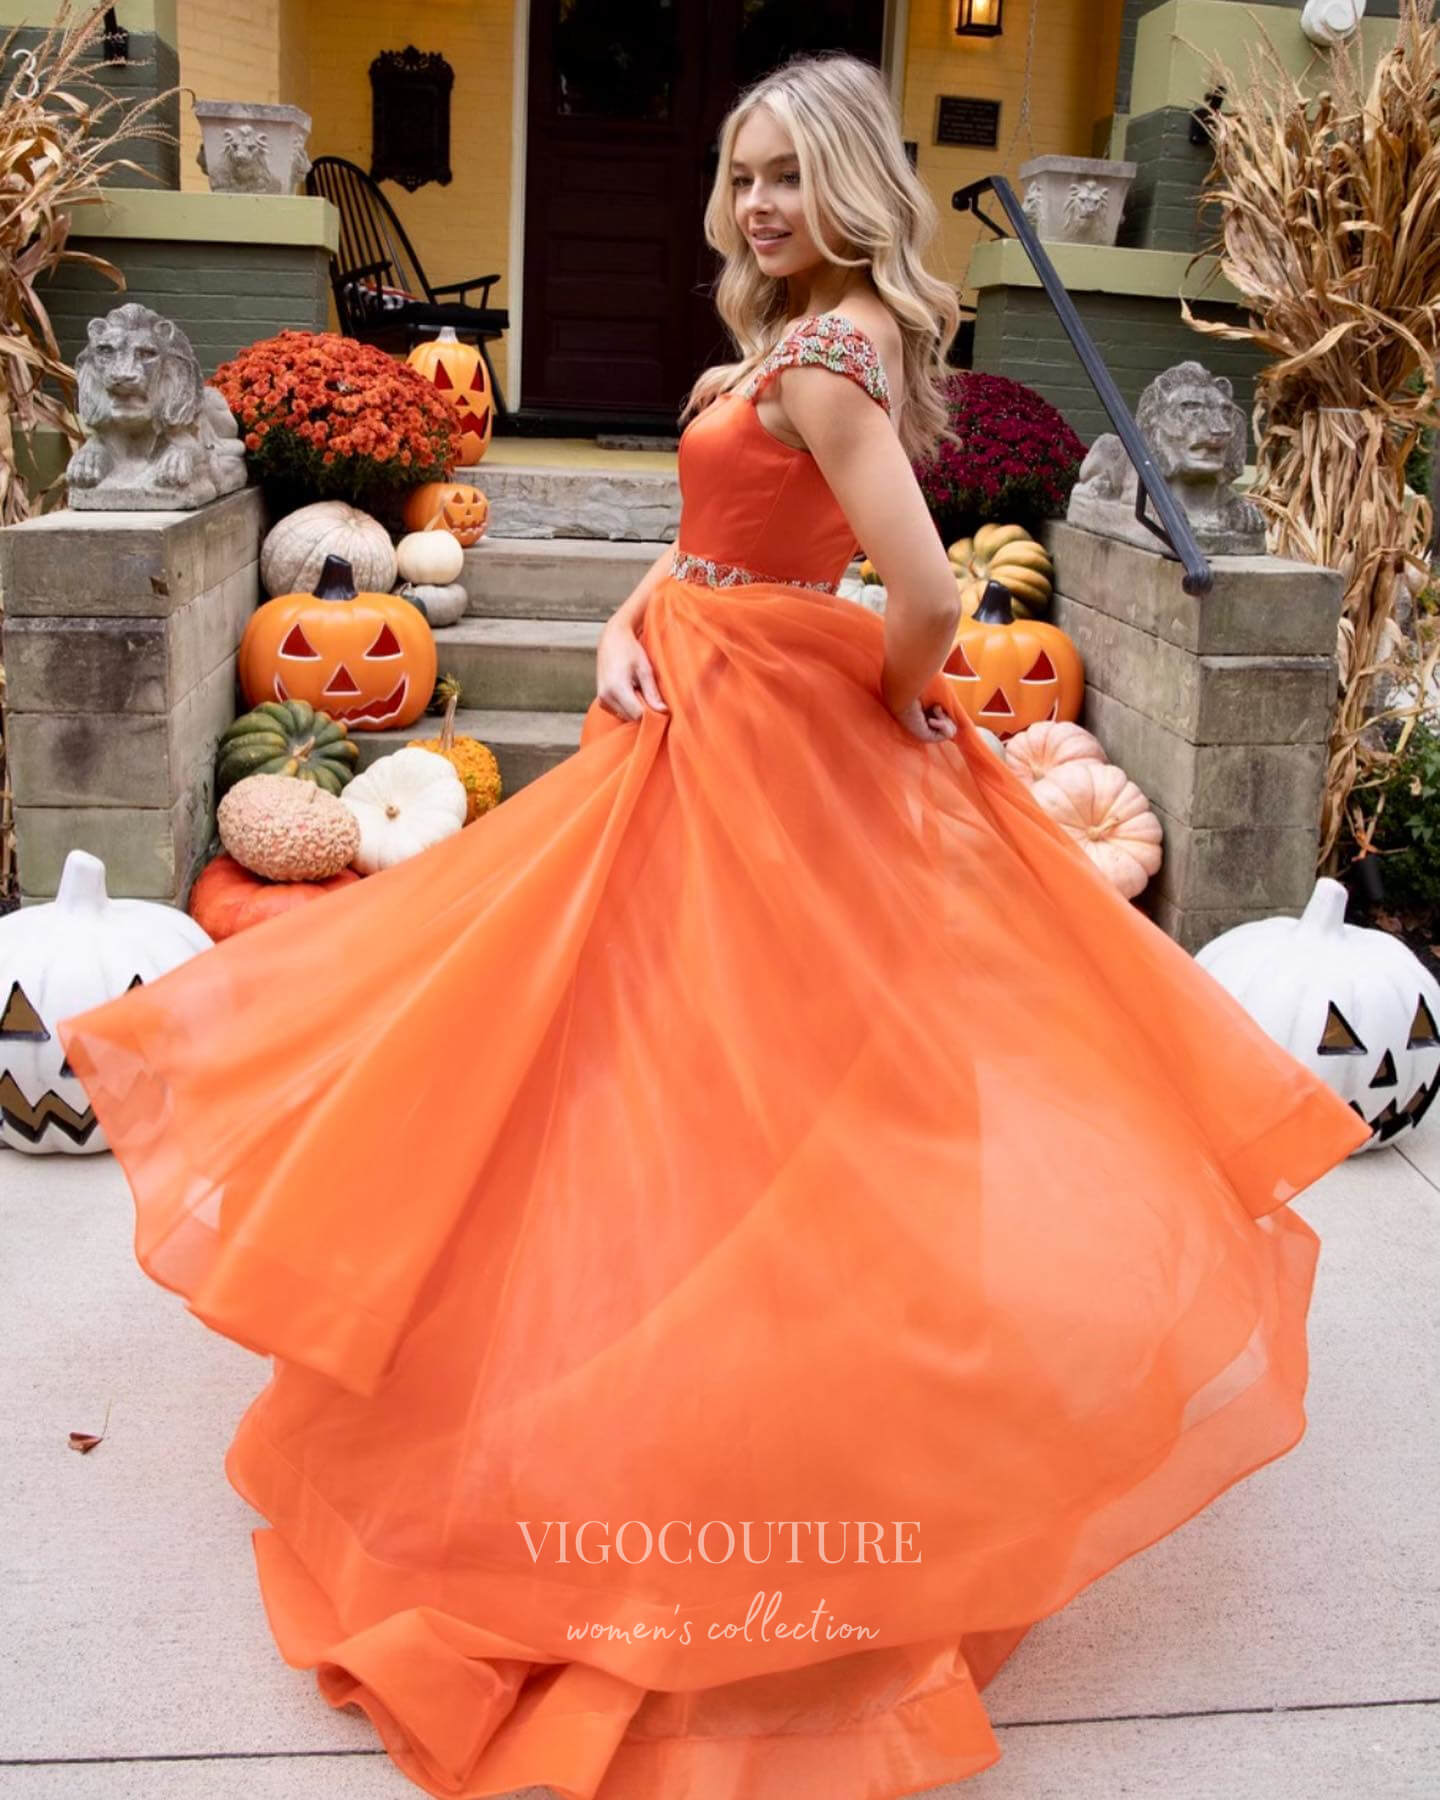 vigocouture-Orange Cap Sleeve Prom Dresses Organza A-Line Evening Dress 21792-Prom Dresses-vigocouture-